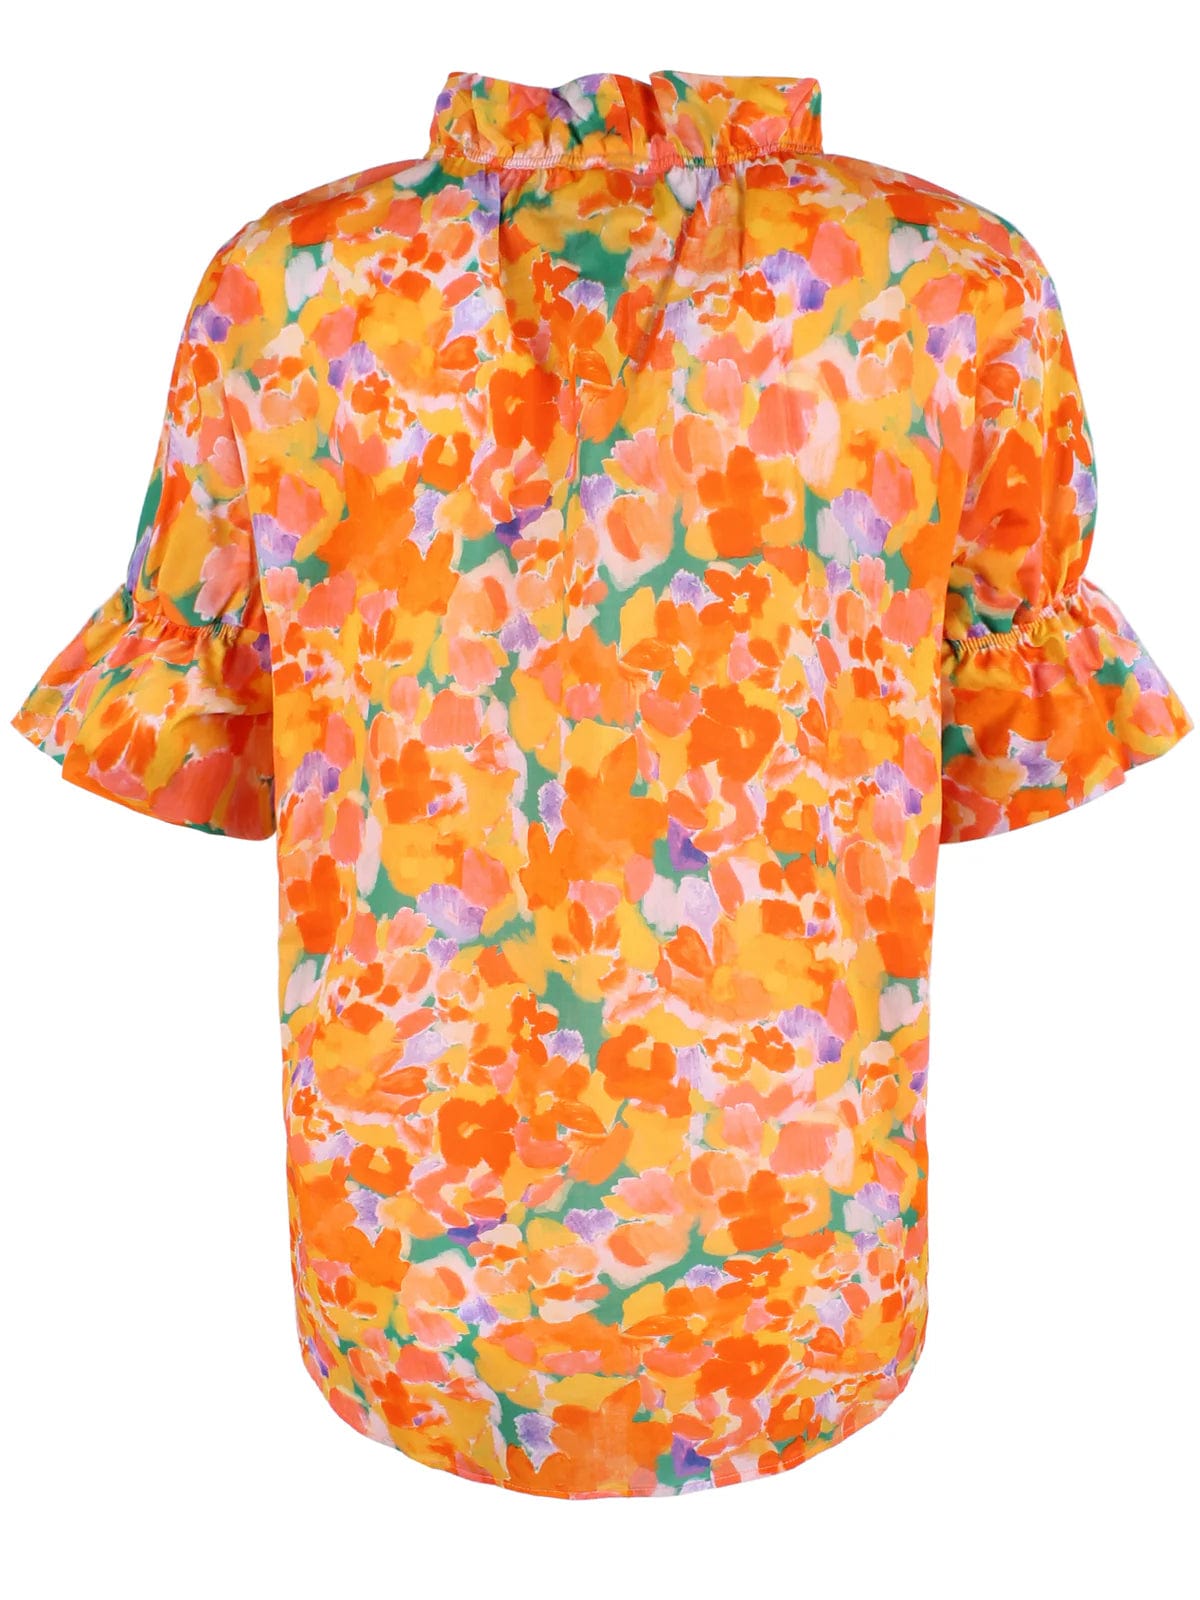 Finley Shirts Women's Shirts & Tops Finley Crosby Top Capri Floral